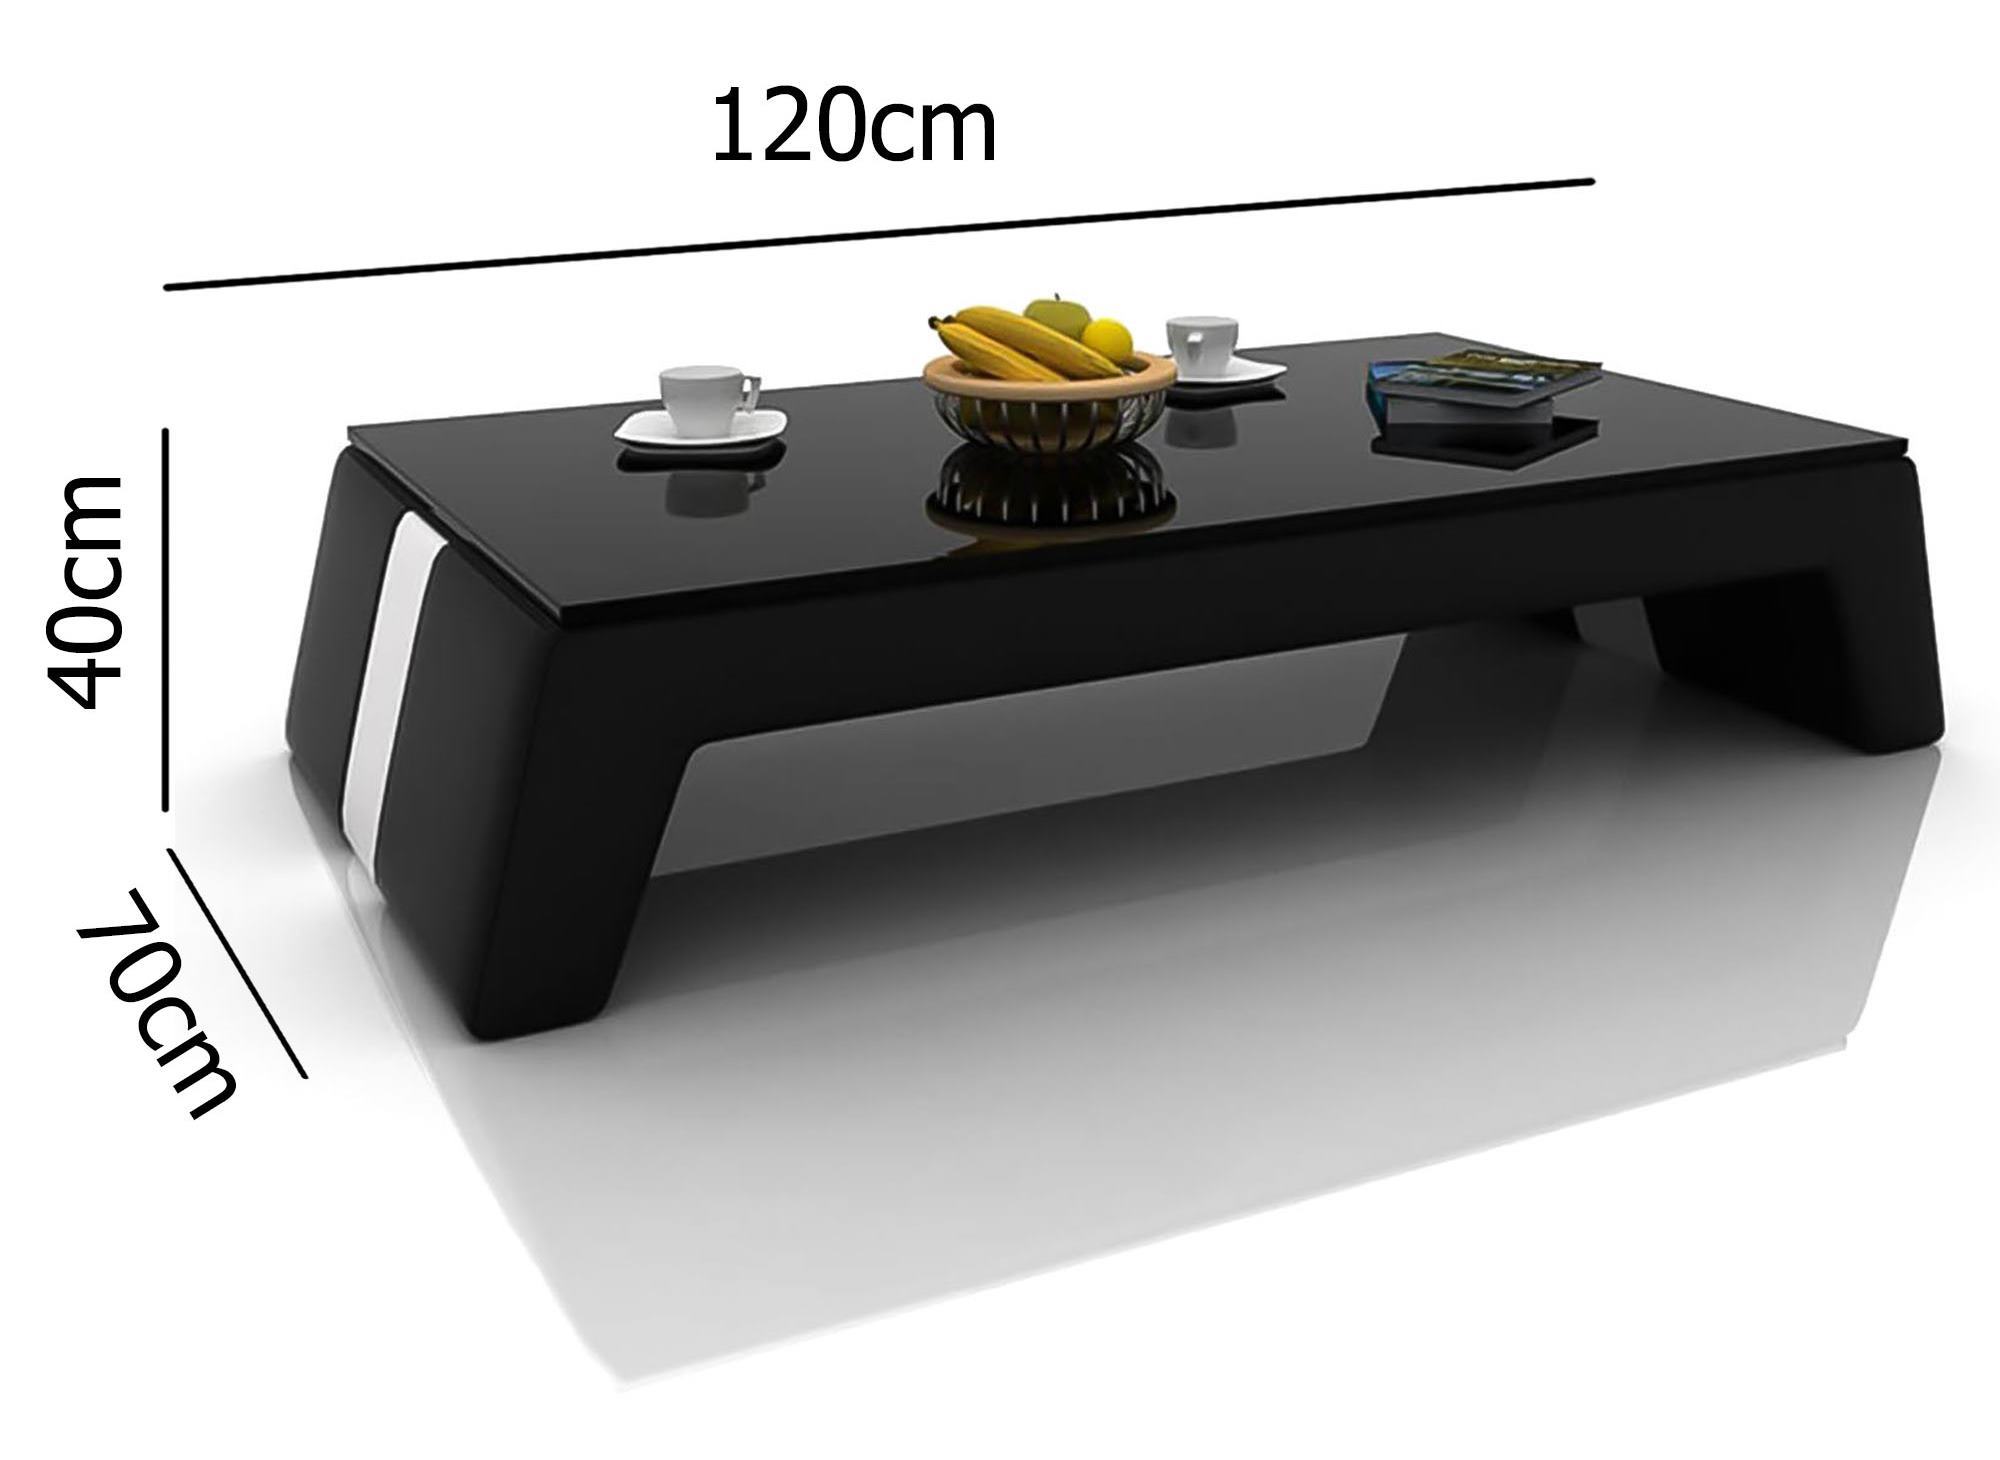 table basse design noir